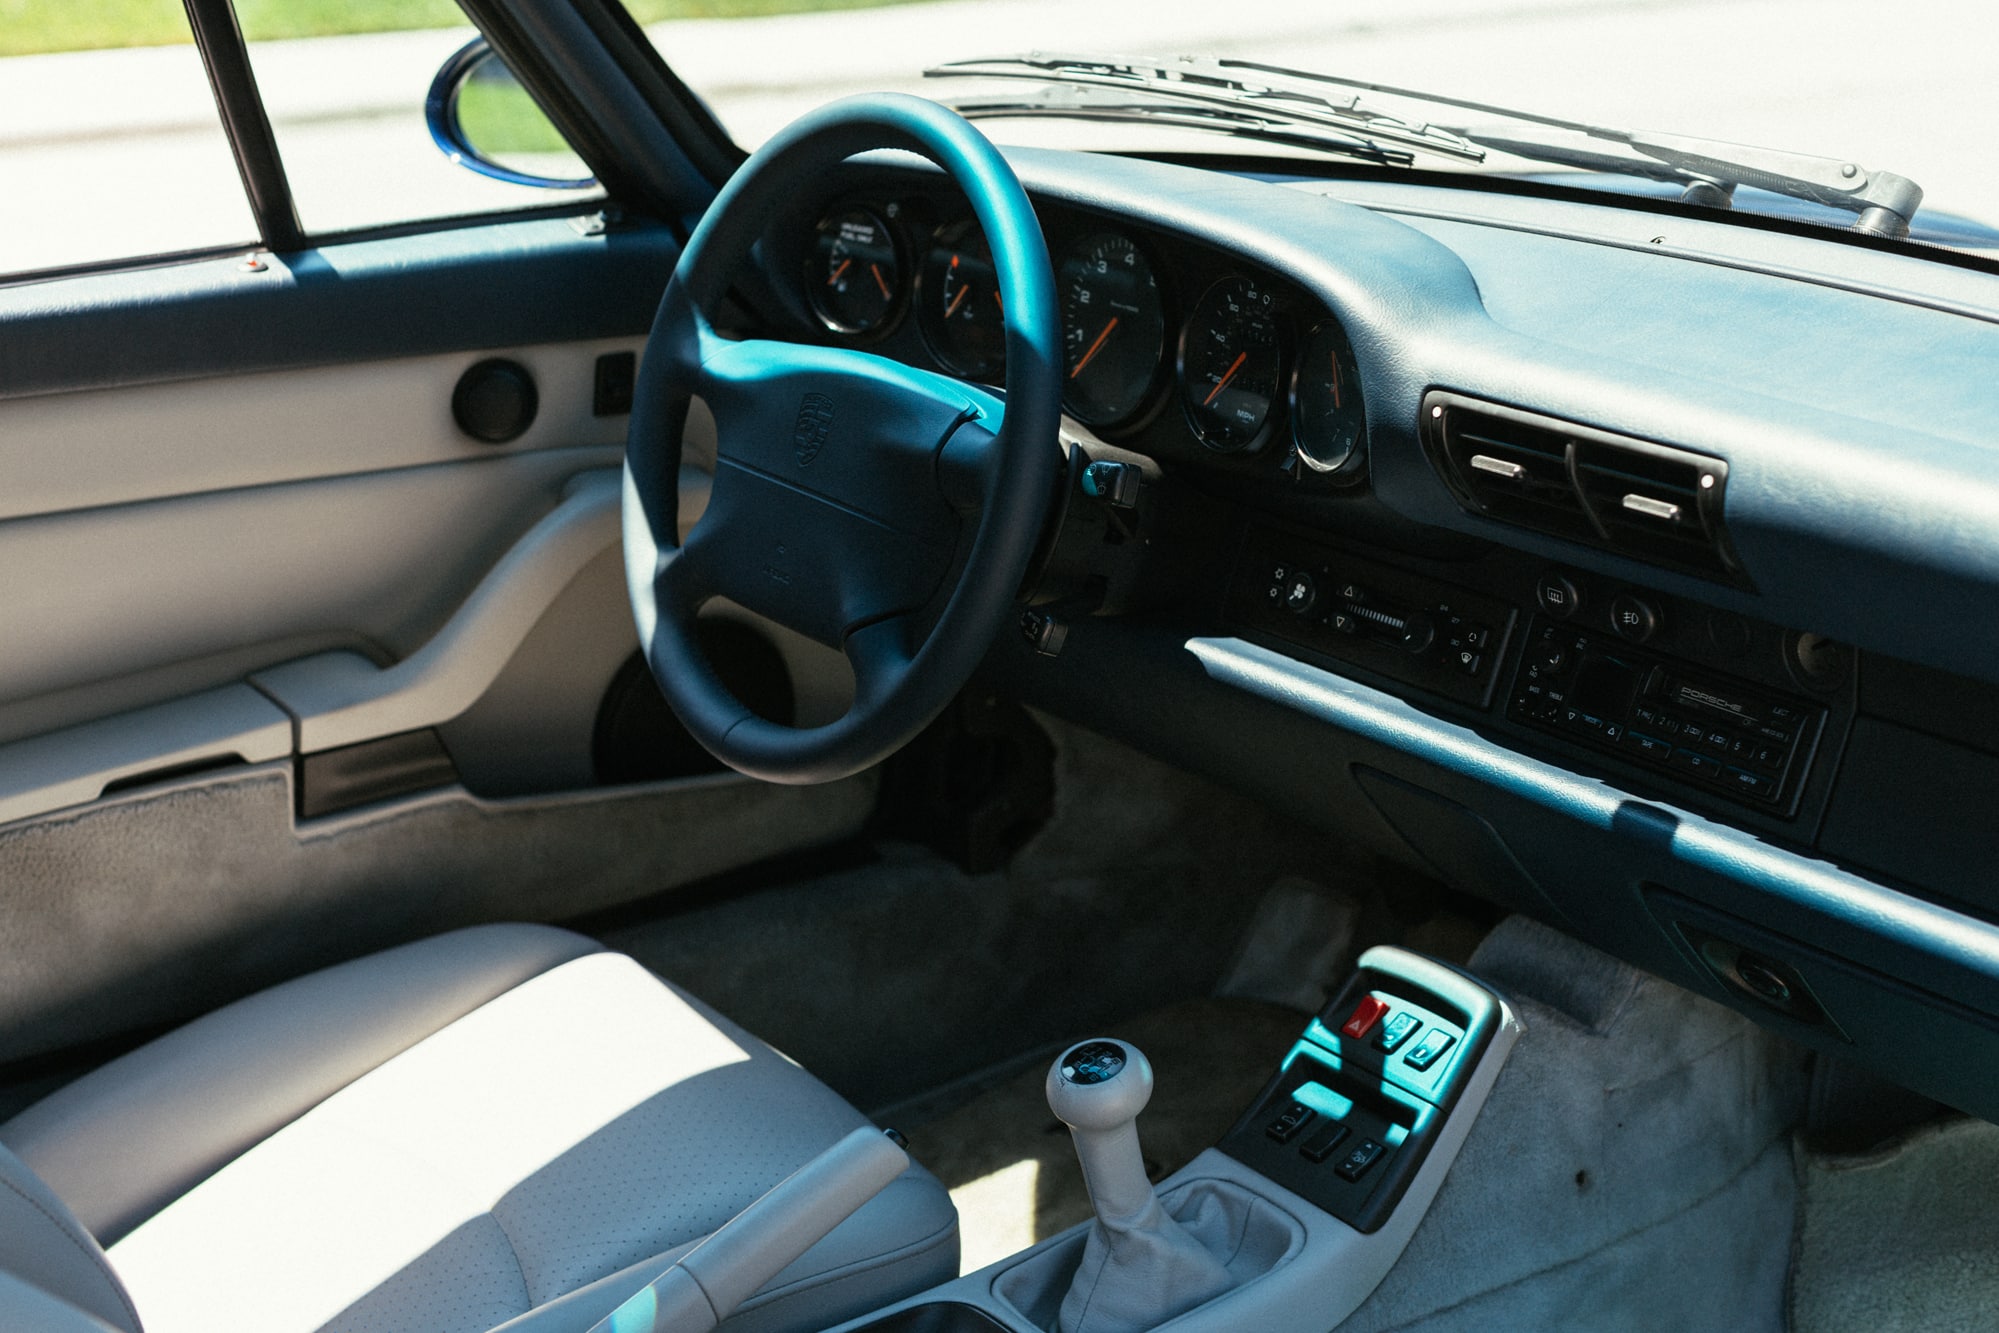 1995 Porsche 911 Carrera (993) – RARE Iris Blue Pearl – 6 Speed Manual – Rich Service History w/Documentation – Well Kept